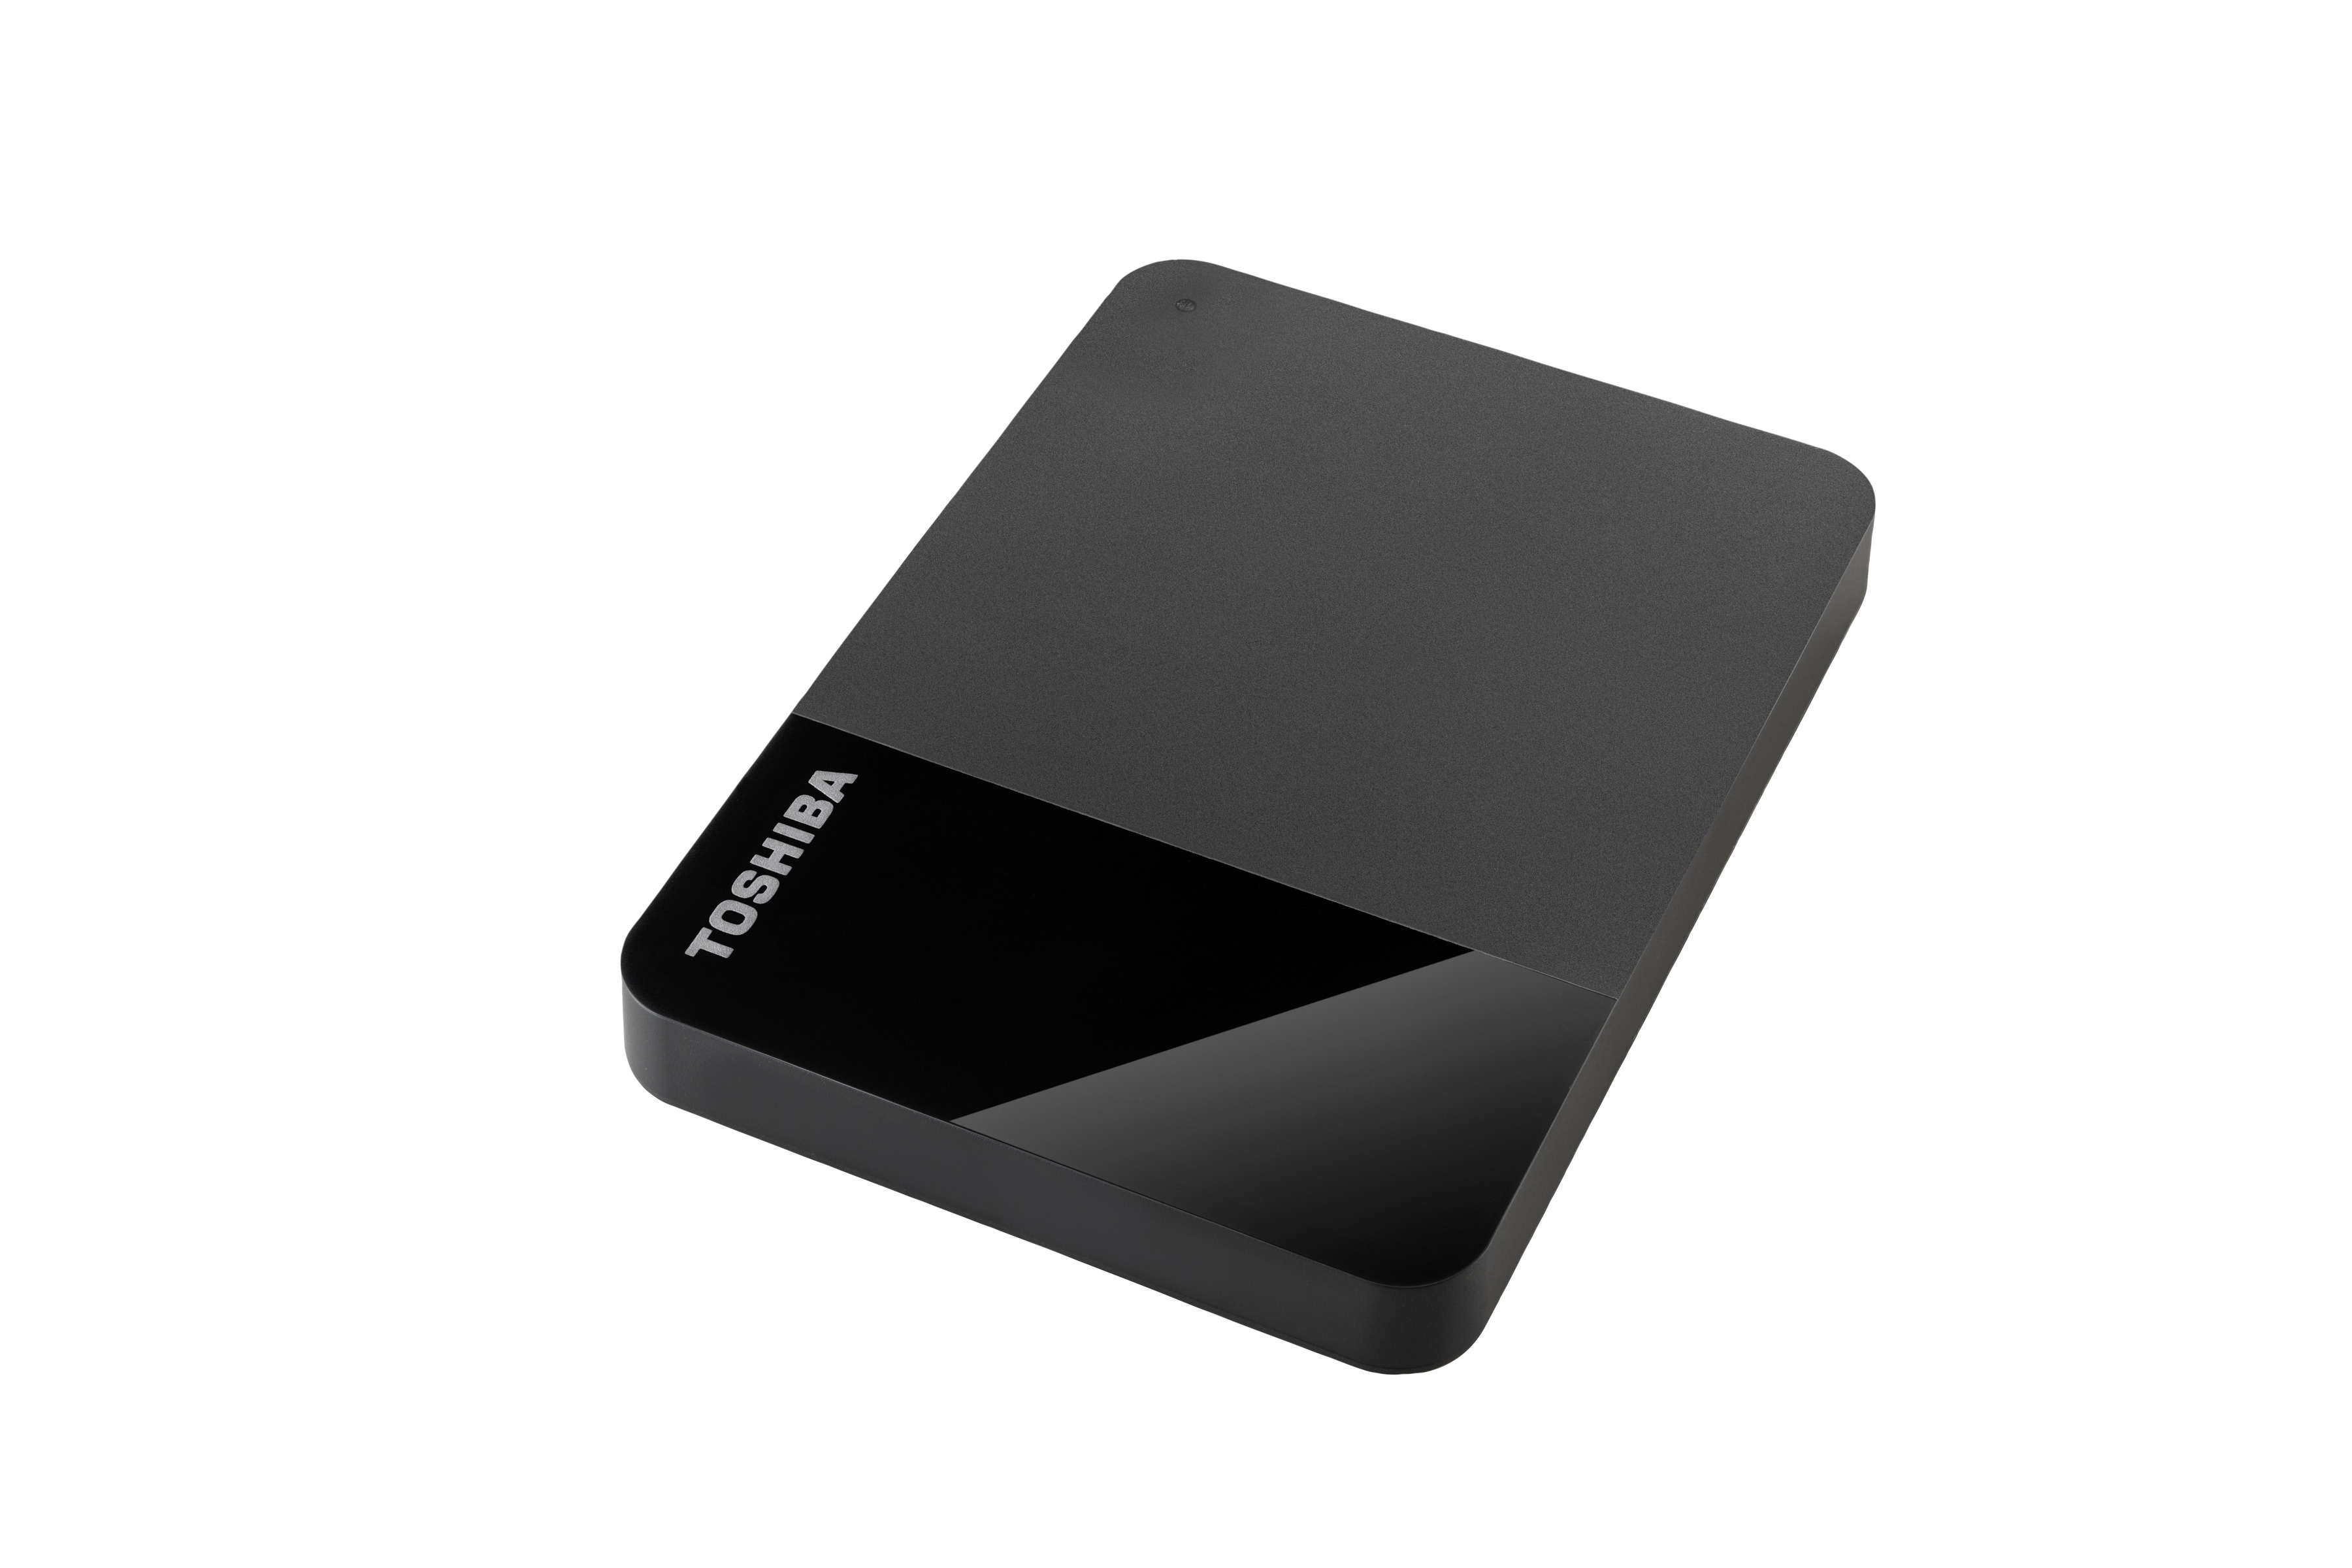 Toshiba Canvio Ready Portable External Hard Drive 1TB Black - image 4 of 5